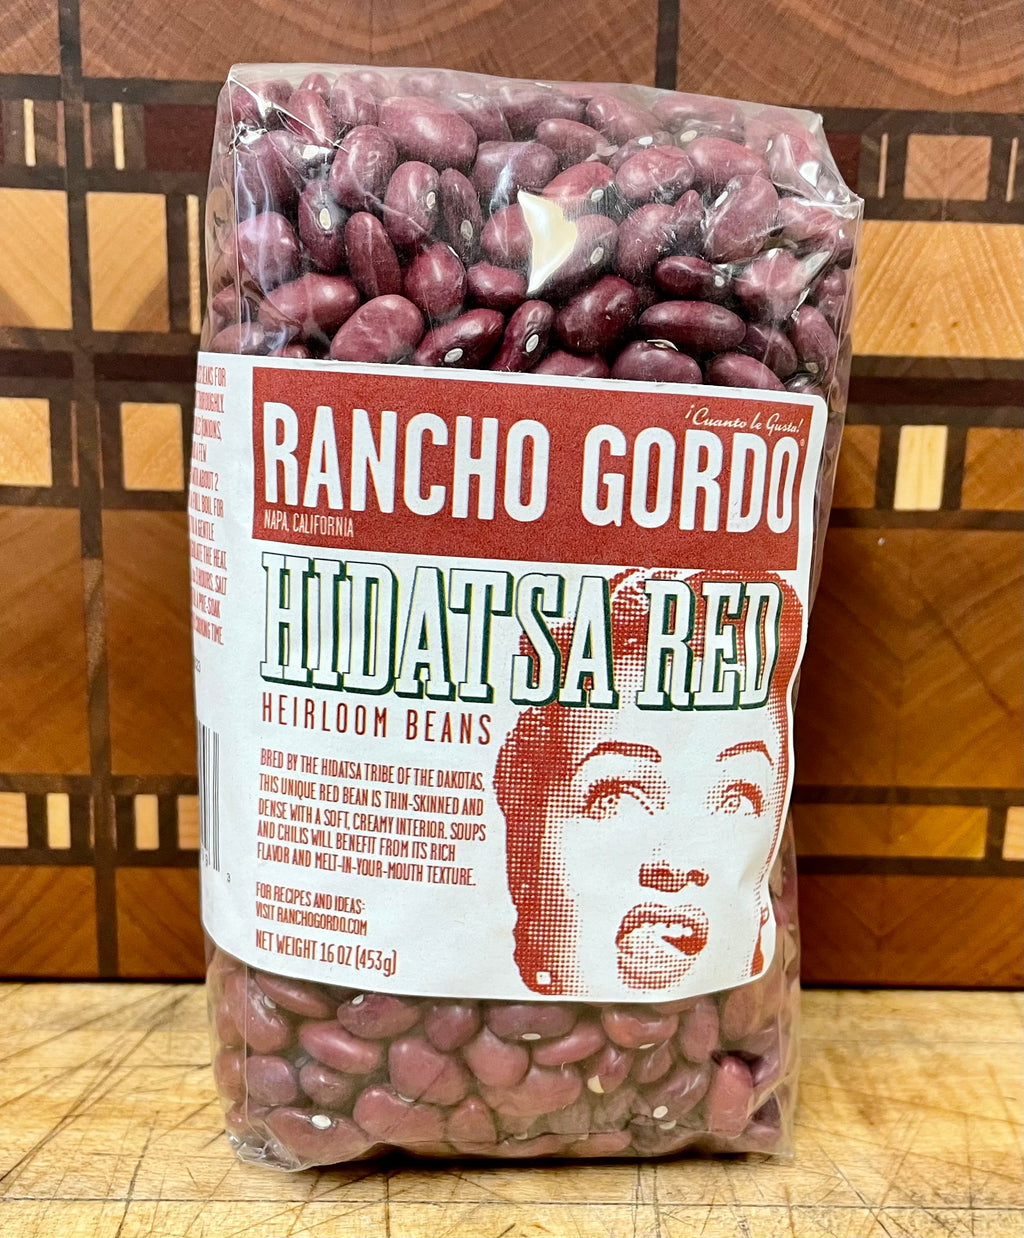 Hidatsa Red - Rancho Gordo Beans